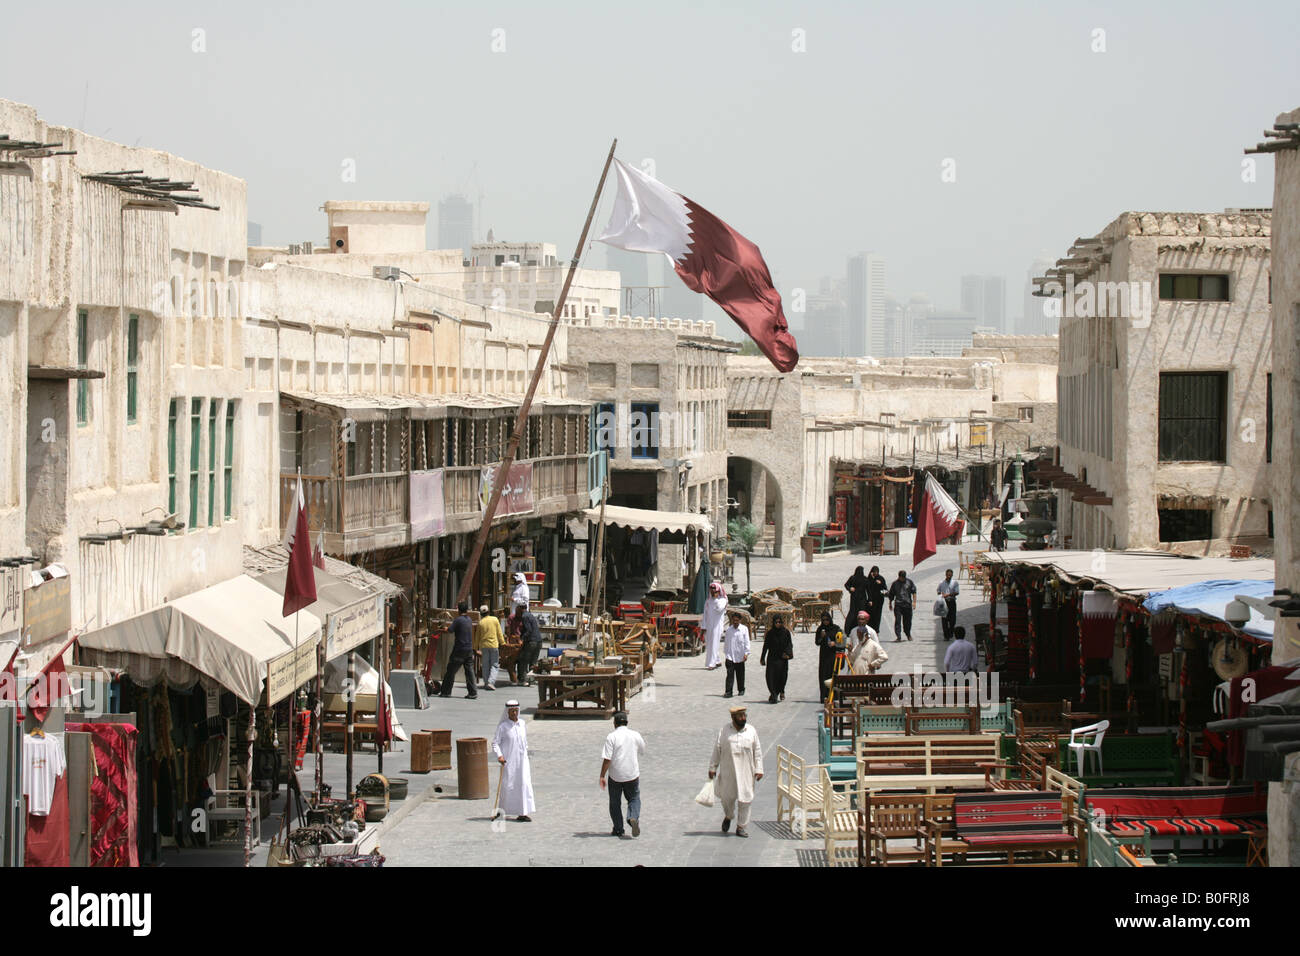 Qatari flag flapping over the Souq Waqif market in Doha, Qatar. Stock Photo